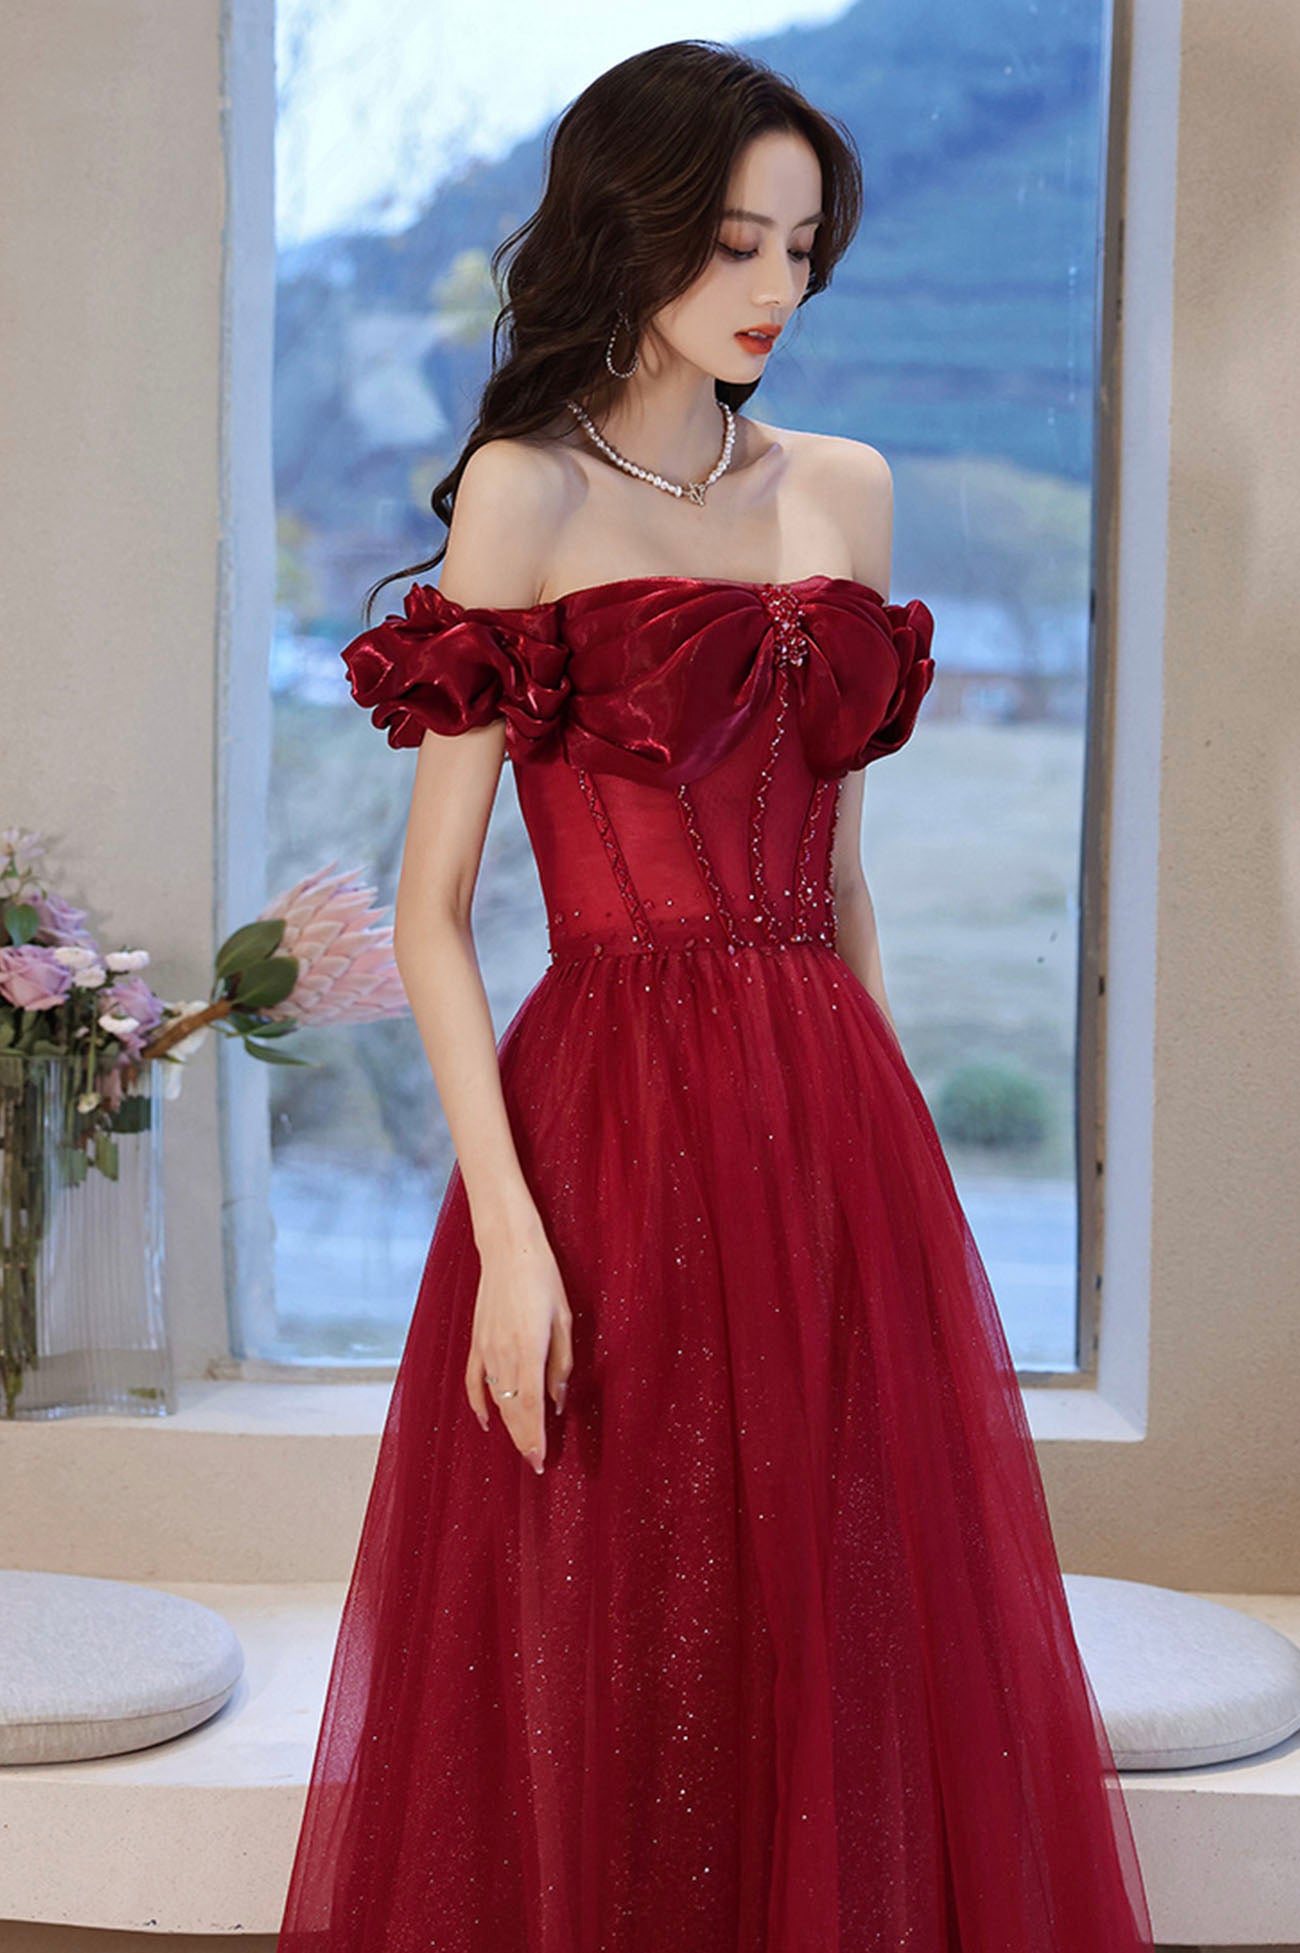 Burgundy Off the Shoulder Prom Dress Sparkly Party Dress, A-line Evening Dress